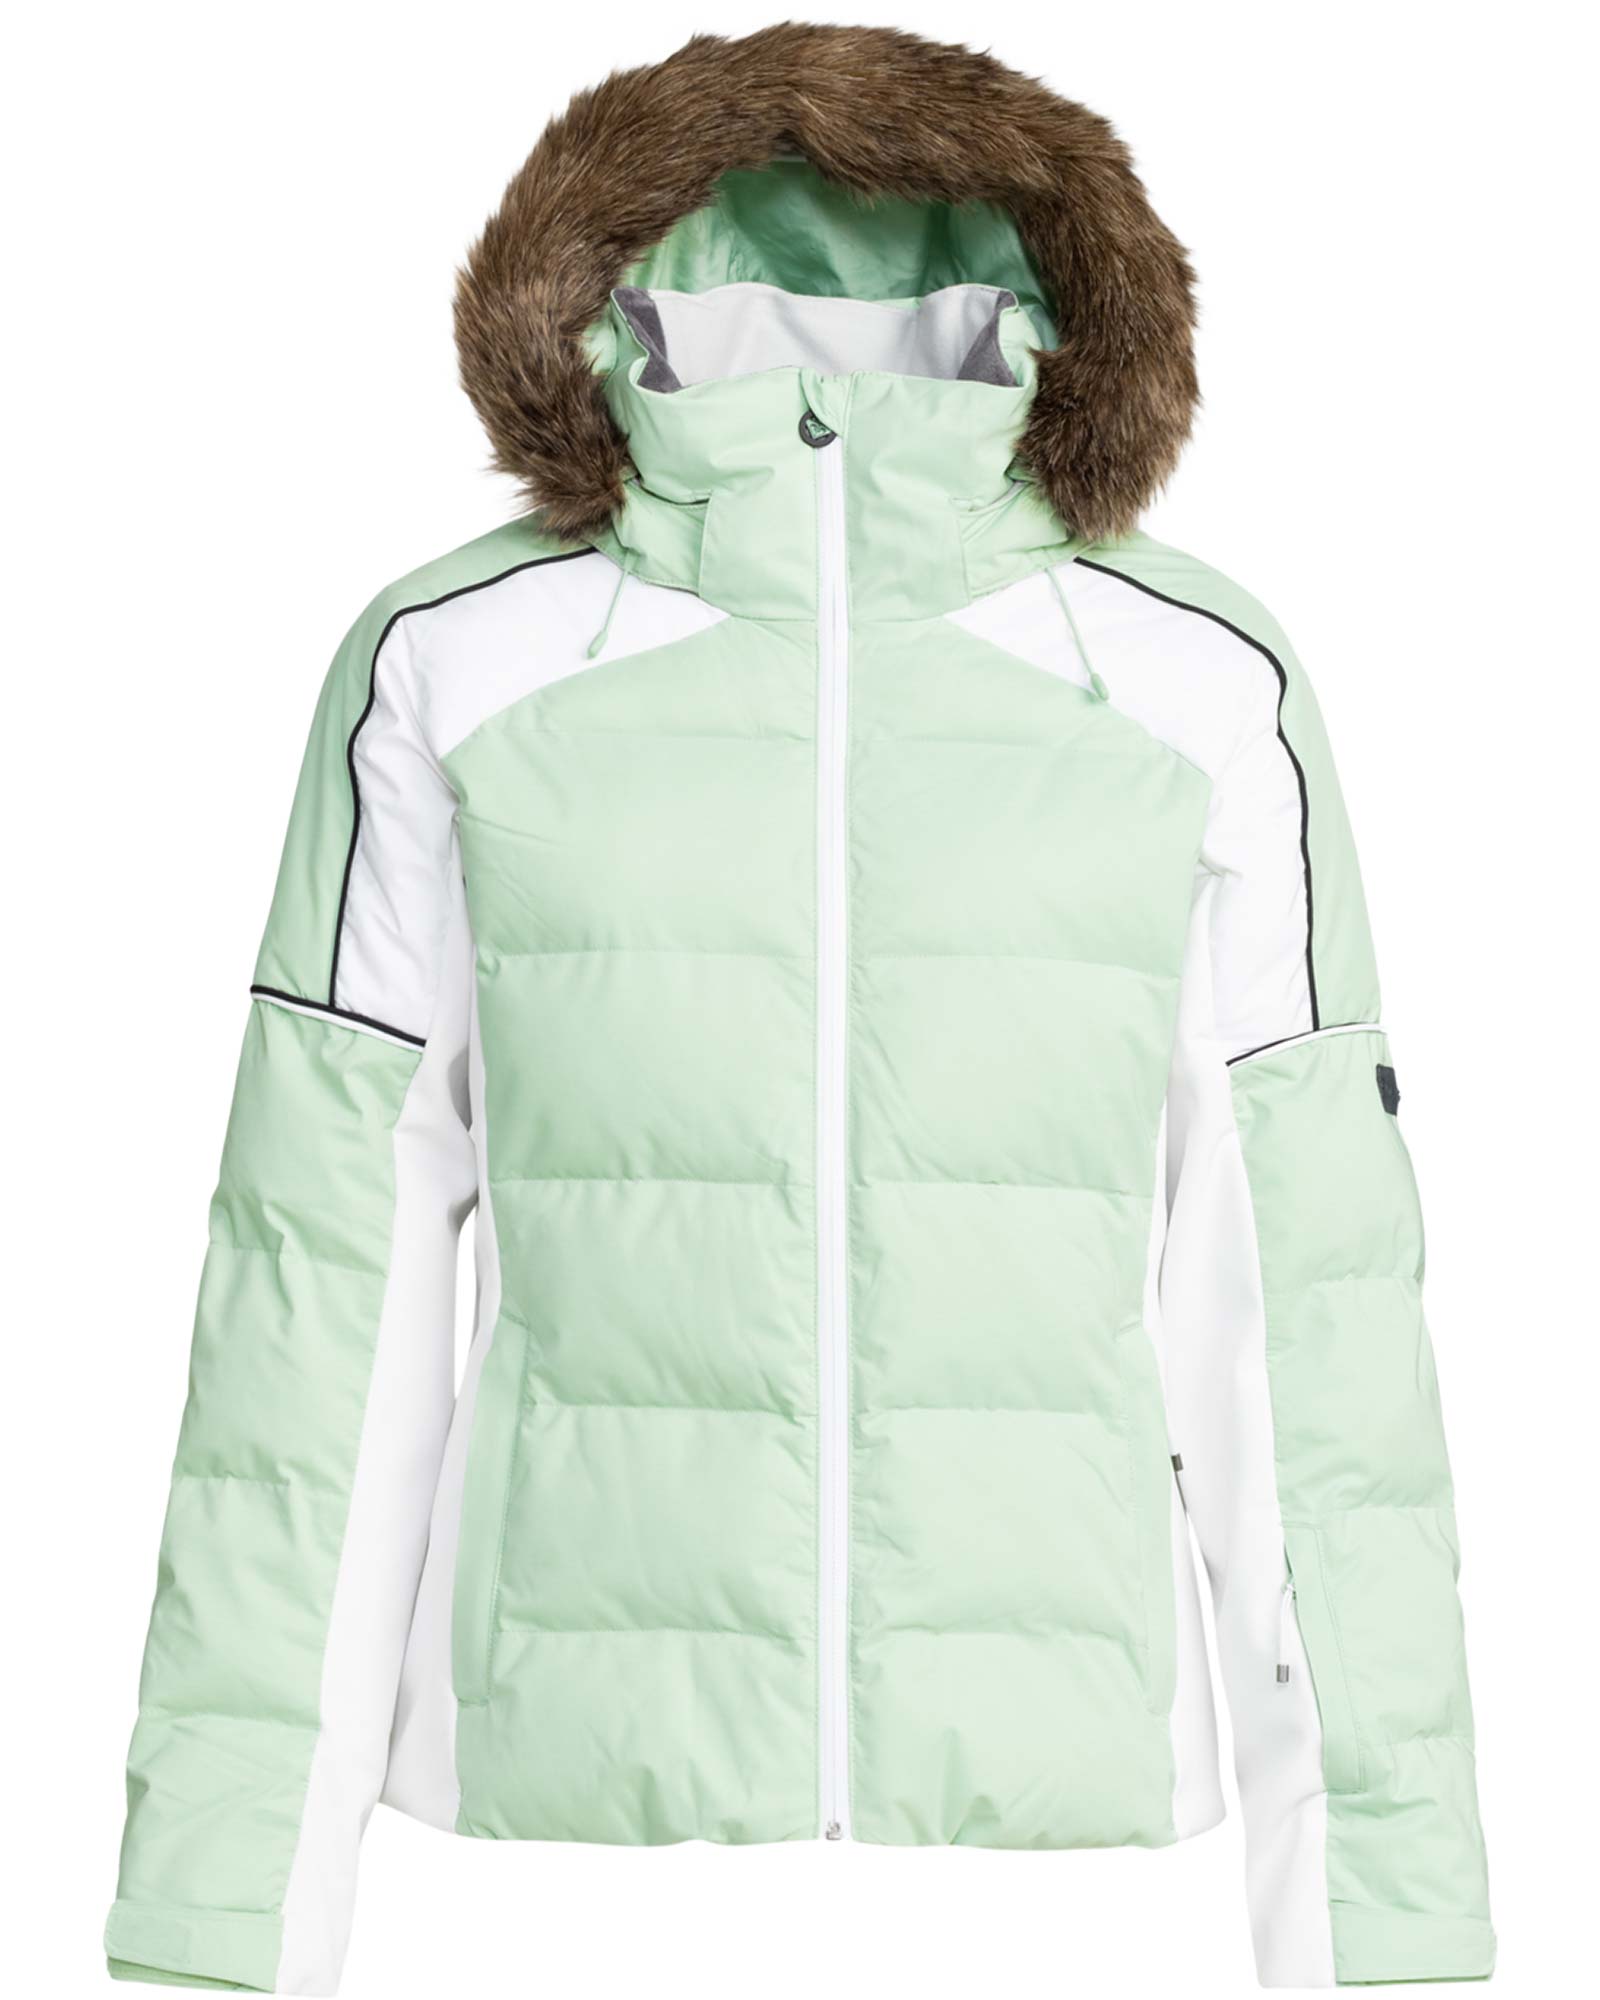 Roxy Snowblizzard Women’s Jacket - Cameo Green XL